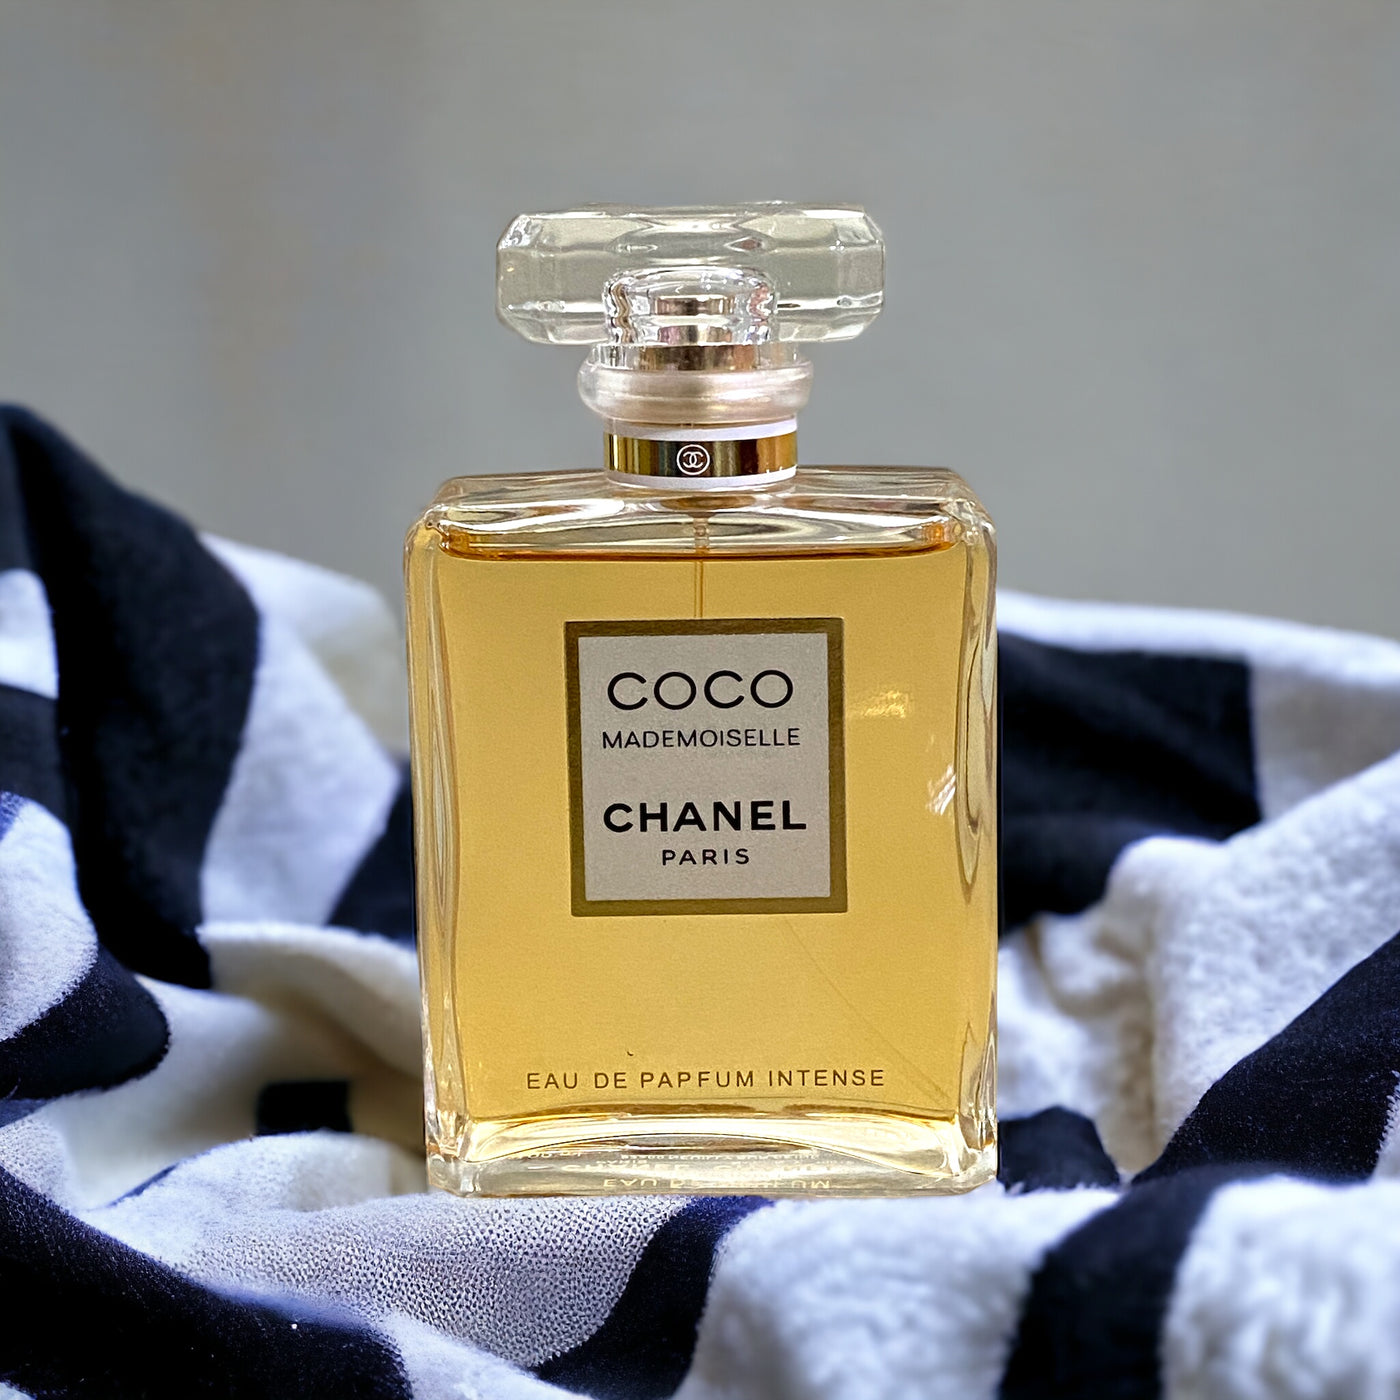 COCO MADEMOISELLE CHANEL Tester Perfume